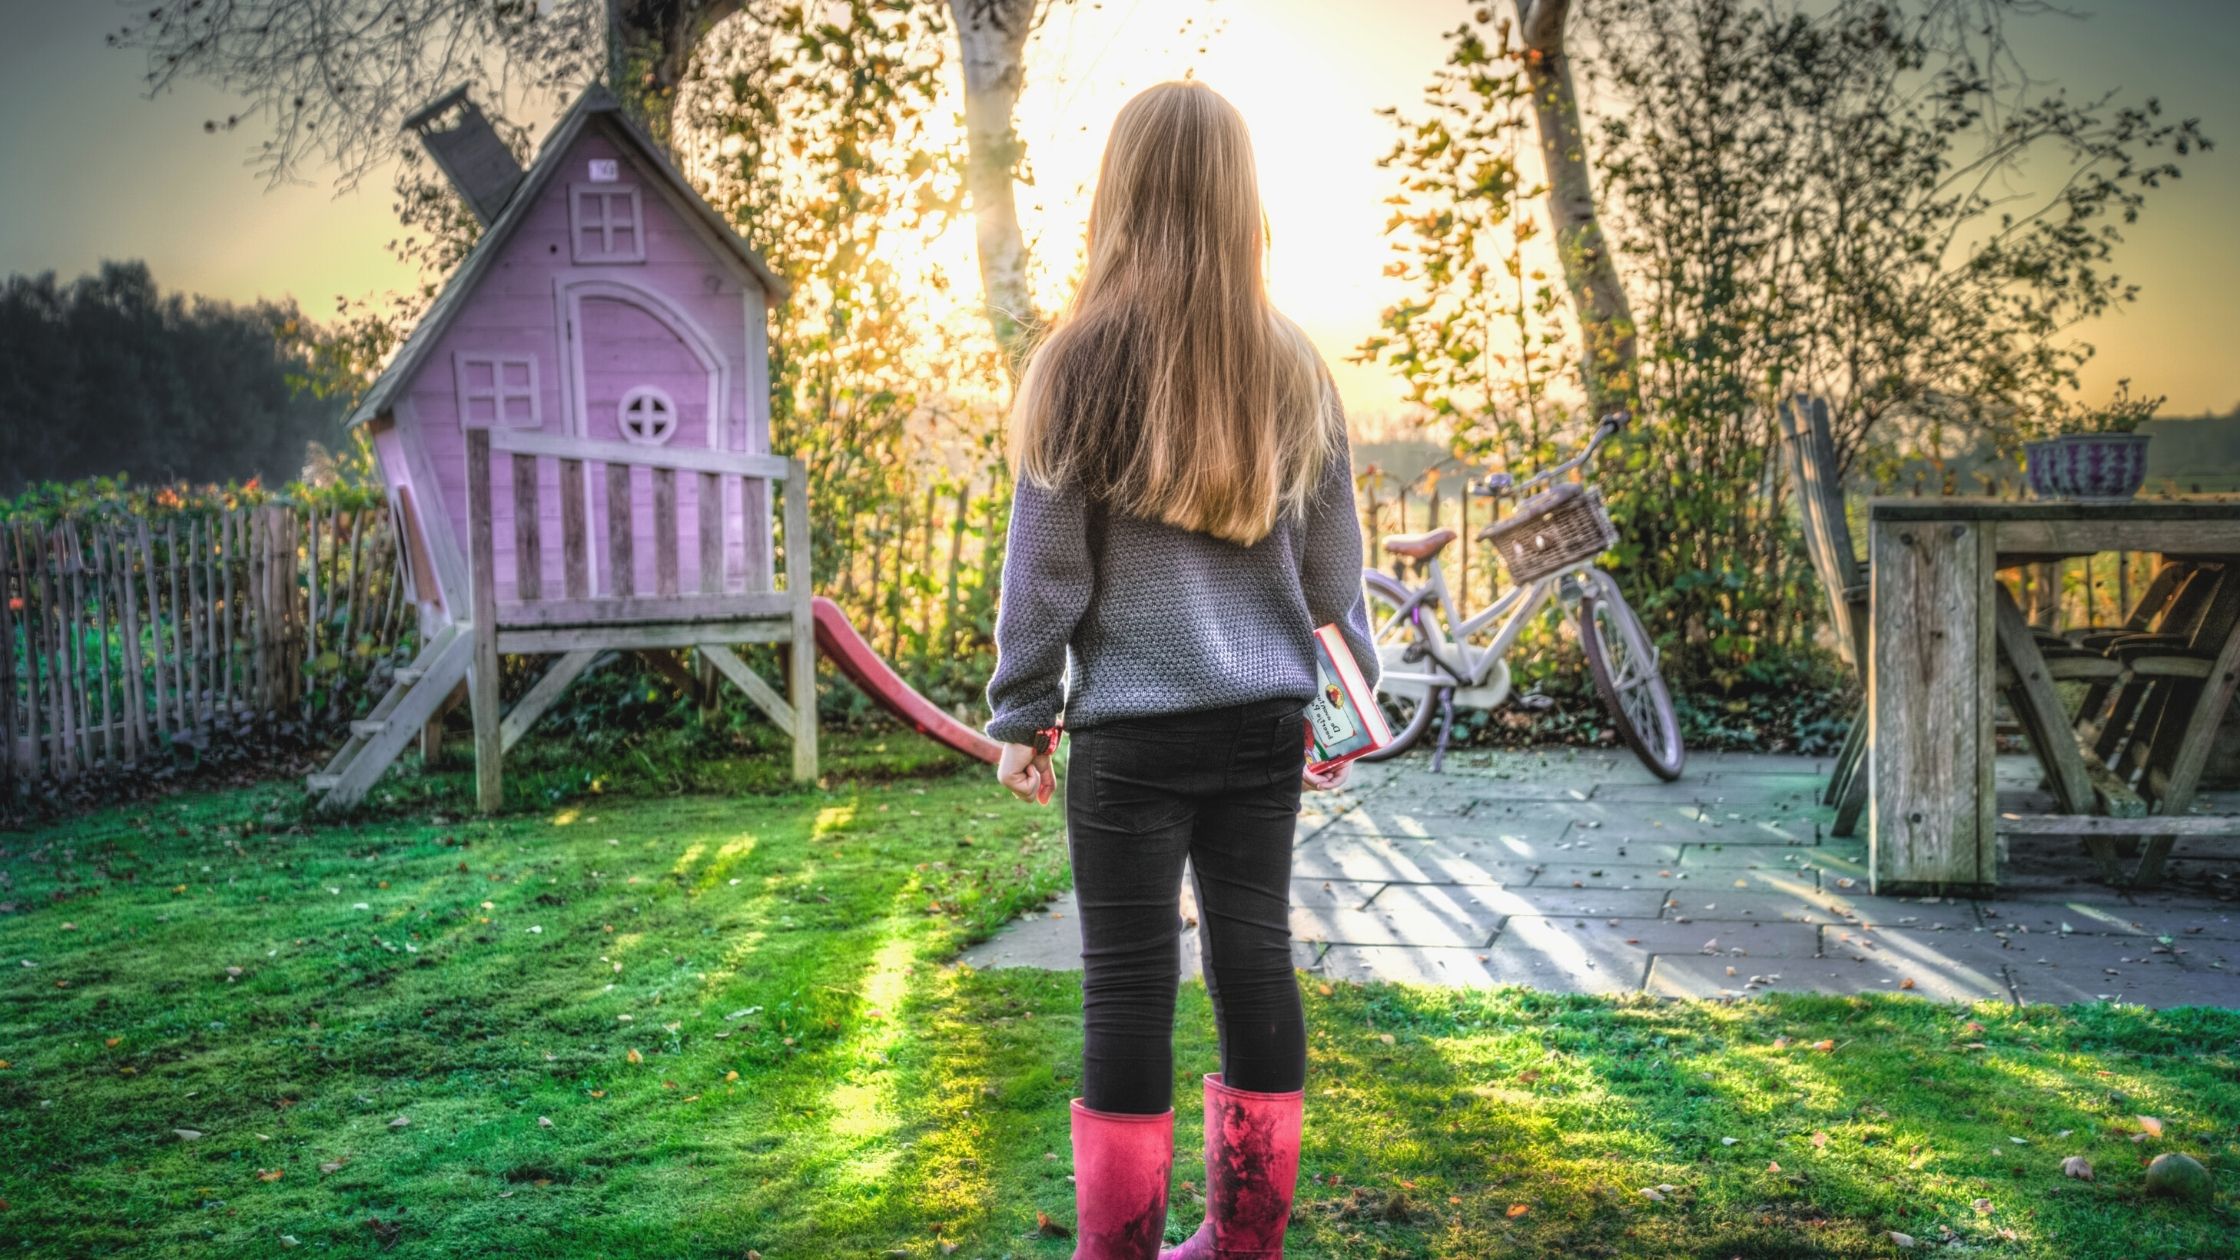 backyard home studio shed grass fence boots pink denver neighnborhood